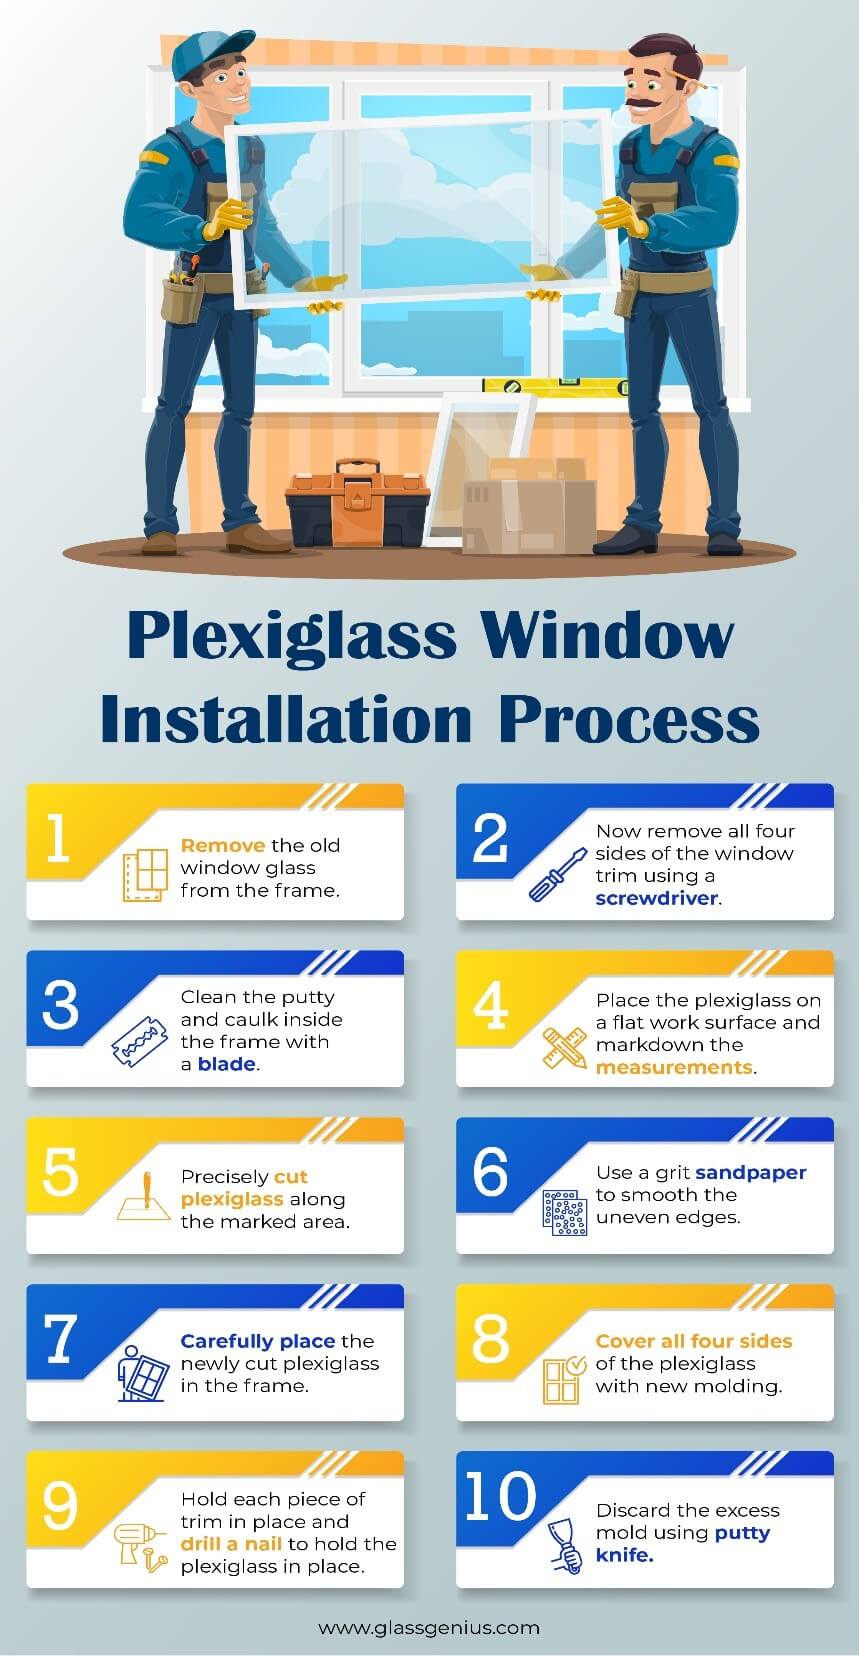 Plexiglass Windows Replacement and Installation Guide - Glass Genius